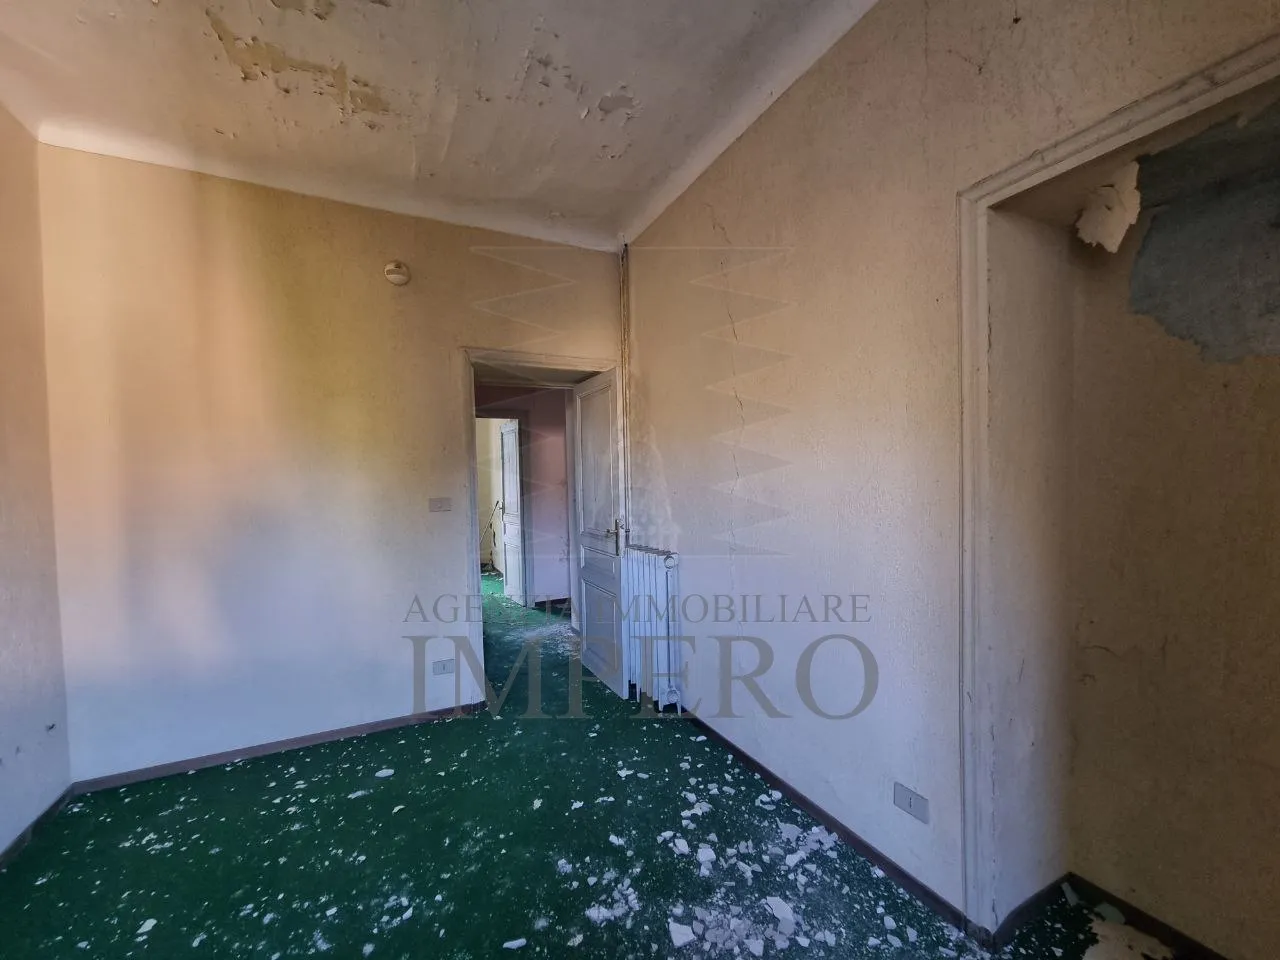 Immagine per casa in vendita a Pigna via San Rocco 1